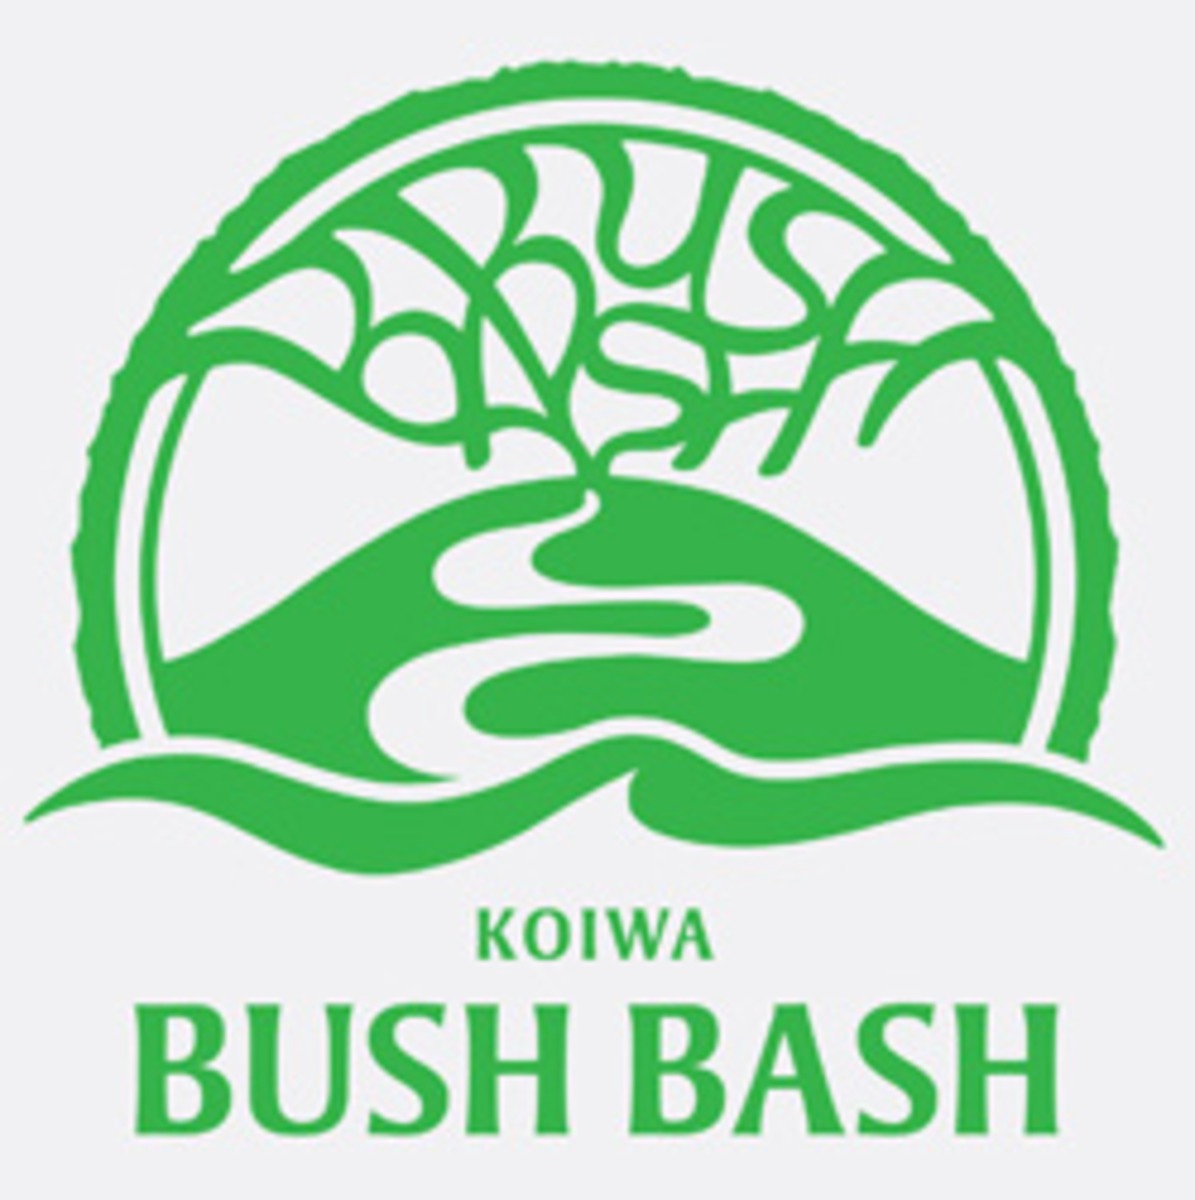 Sale Bushbash